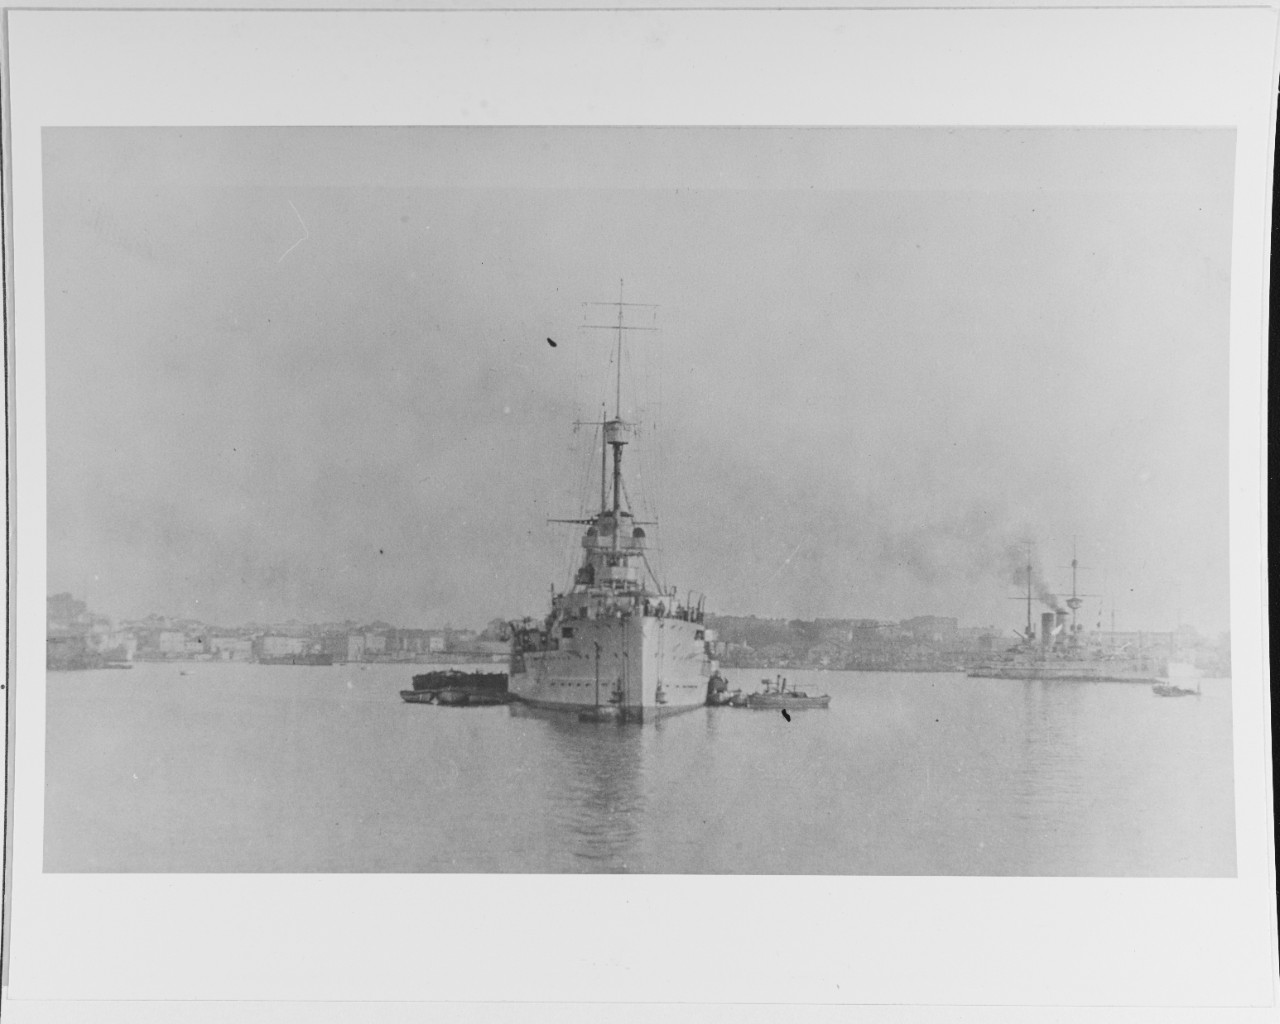 San Giorgio class (Italian Armored cruiser), built in 1908 (center).                                        RADETZKY Class (Austrian Battleship), built in 1908 (right).